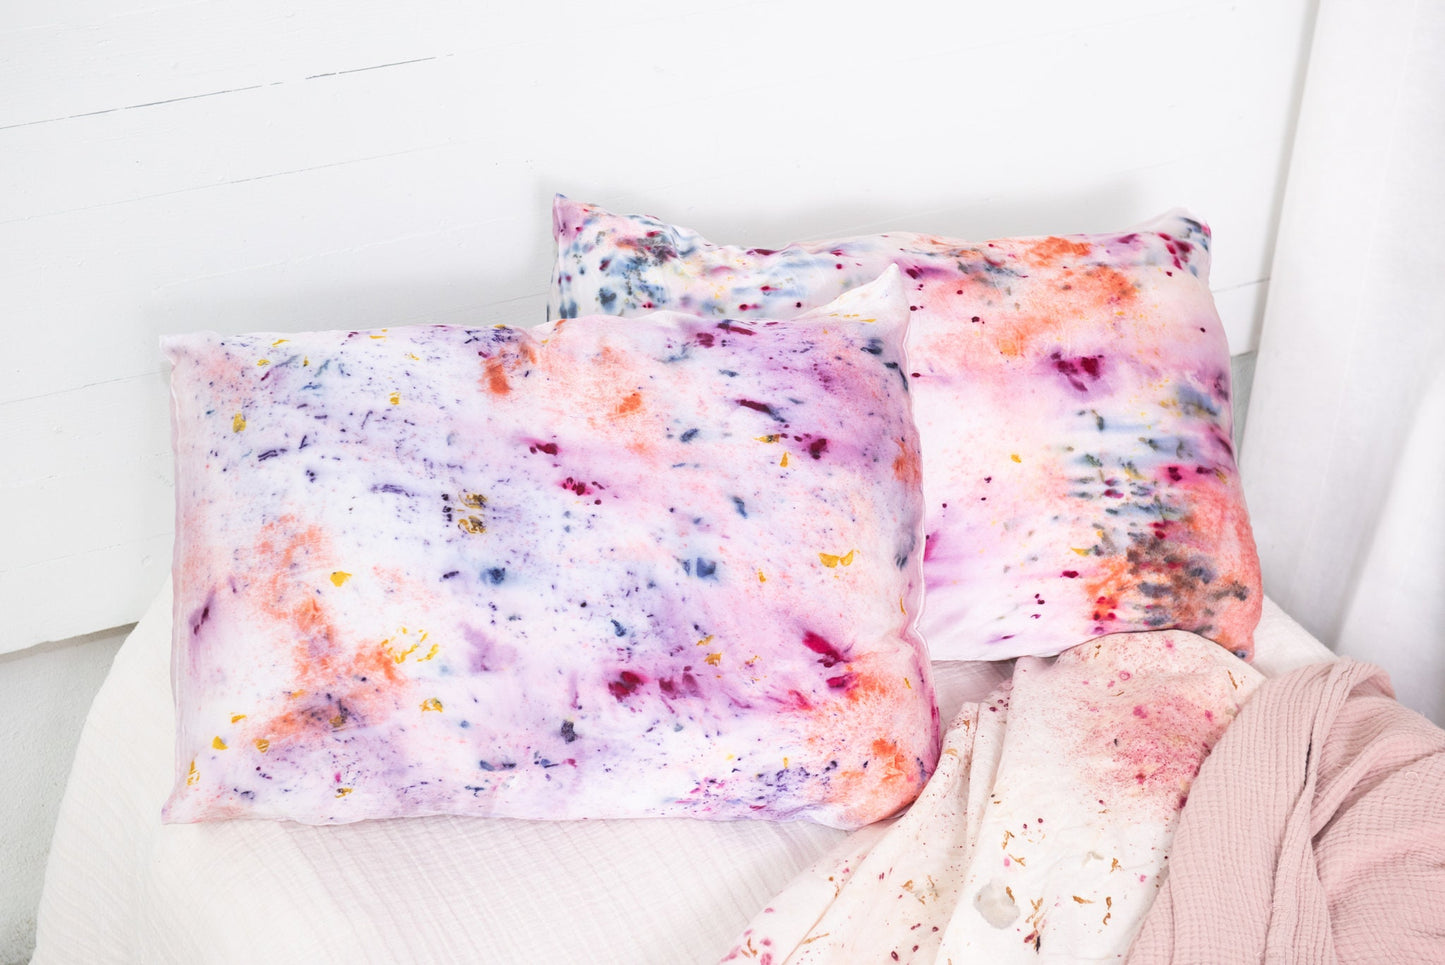 Abstract Botanically Dyed Silk Pillowcase